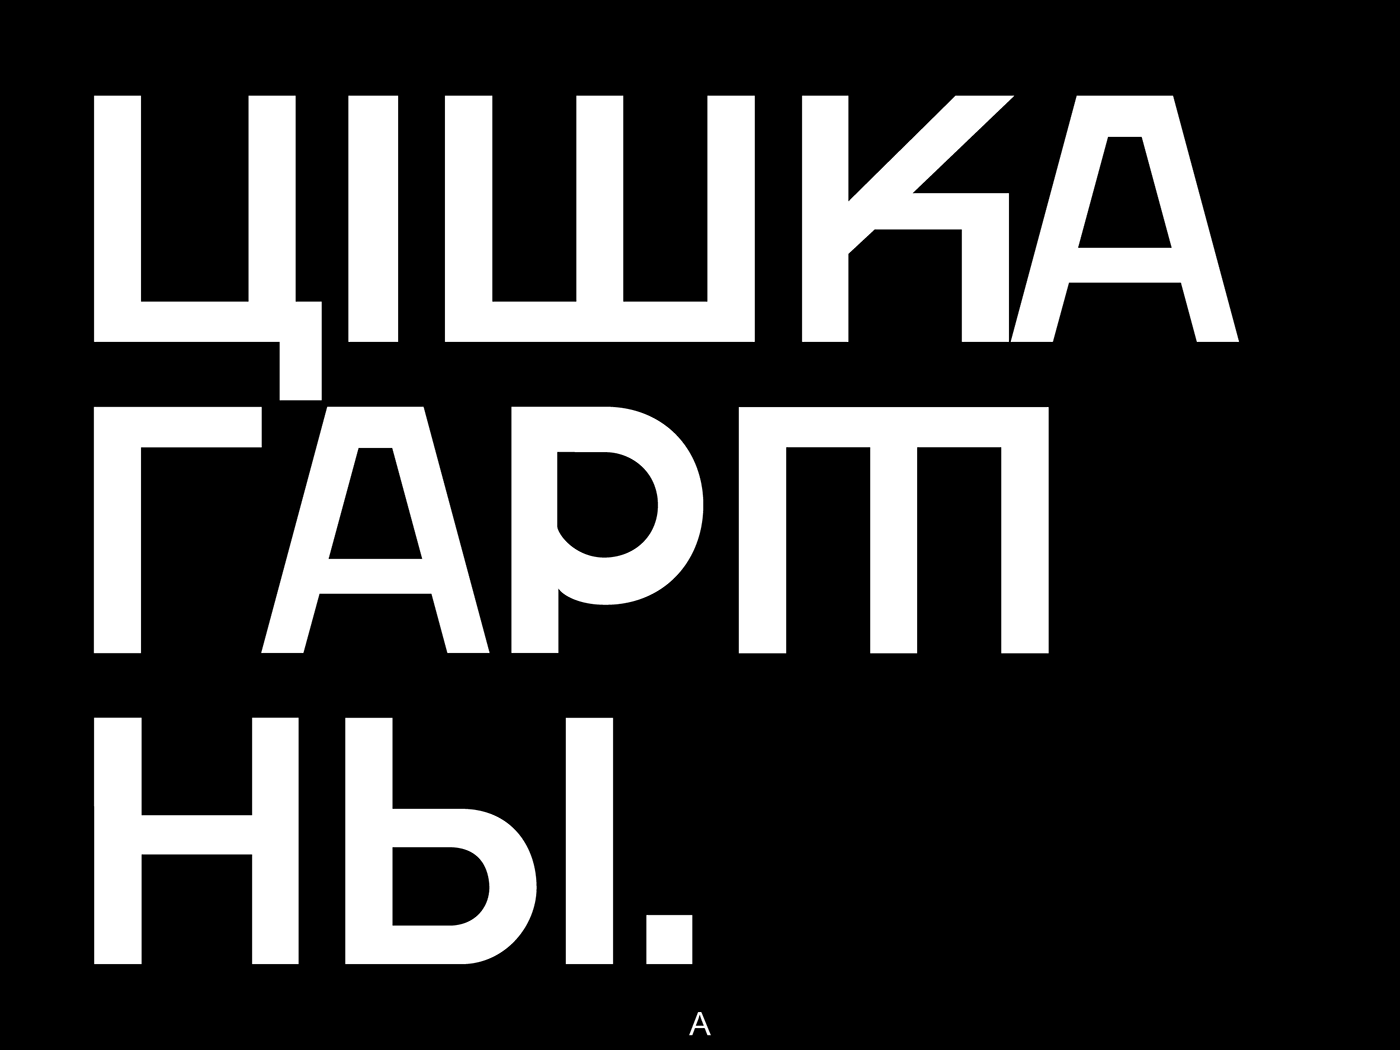 type font typography   belarus Hart print navigation wayfinding union consent